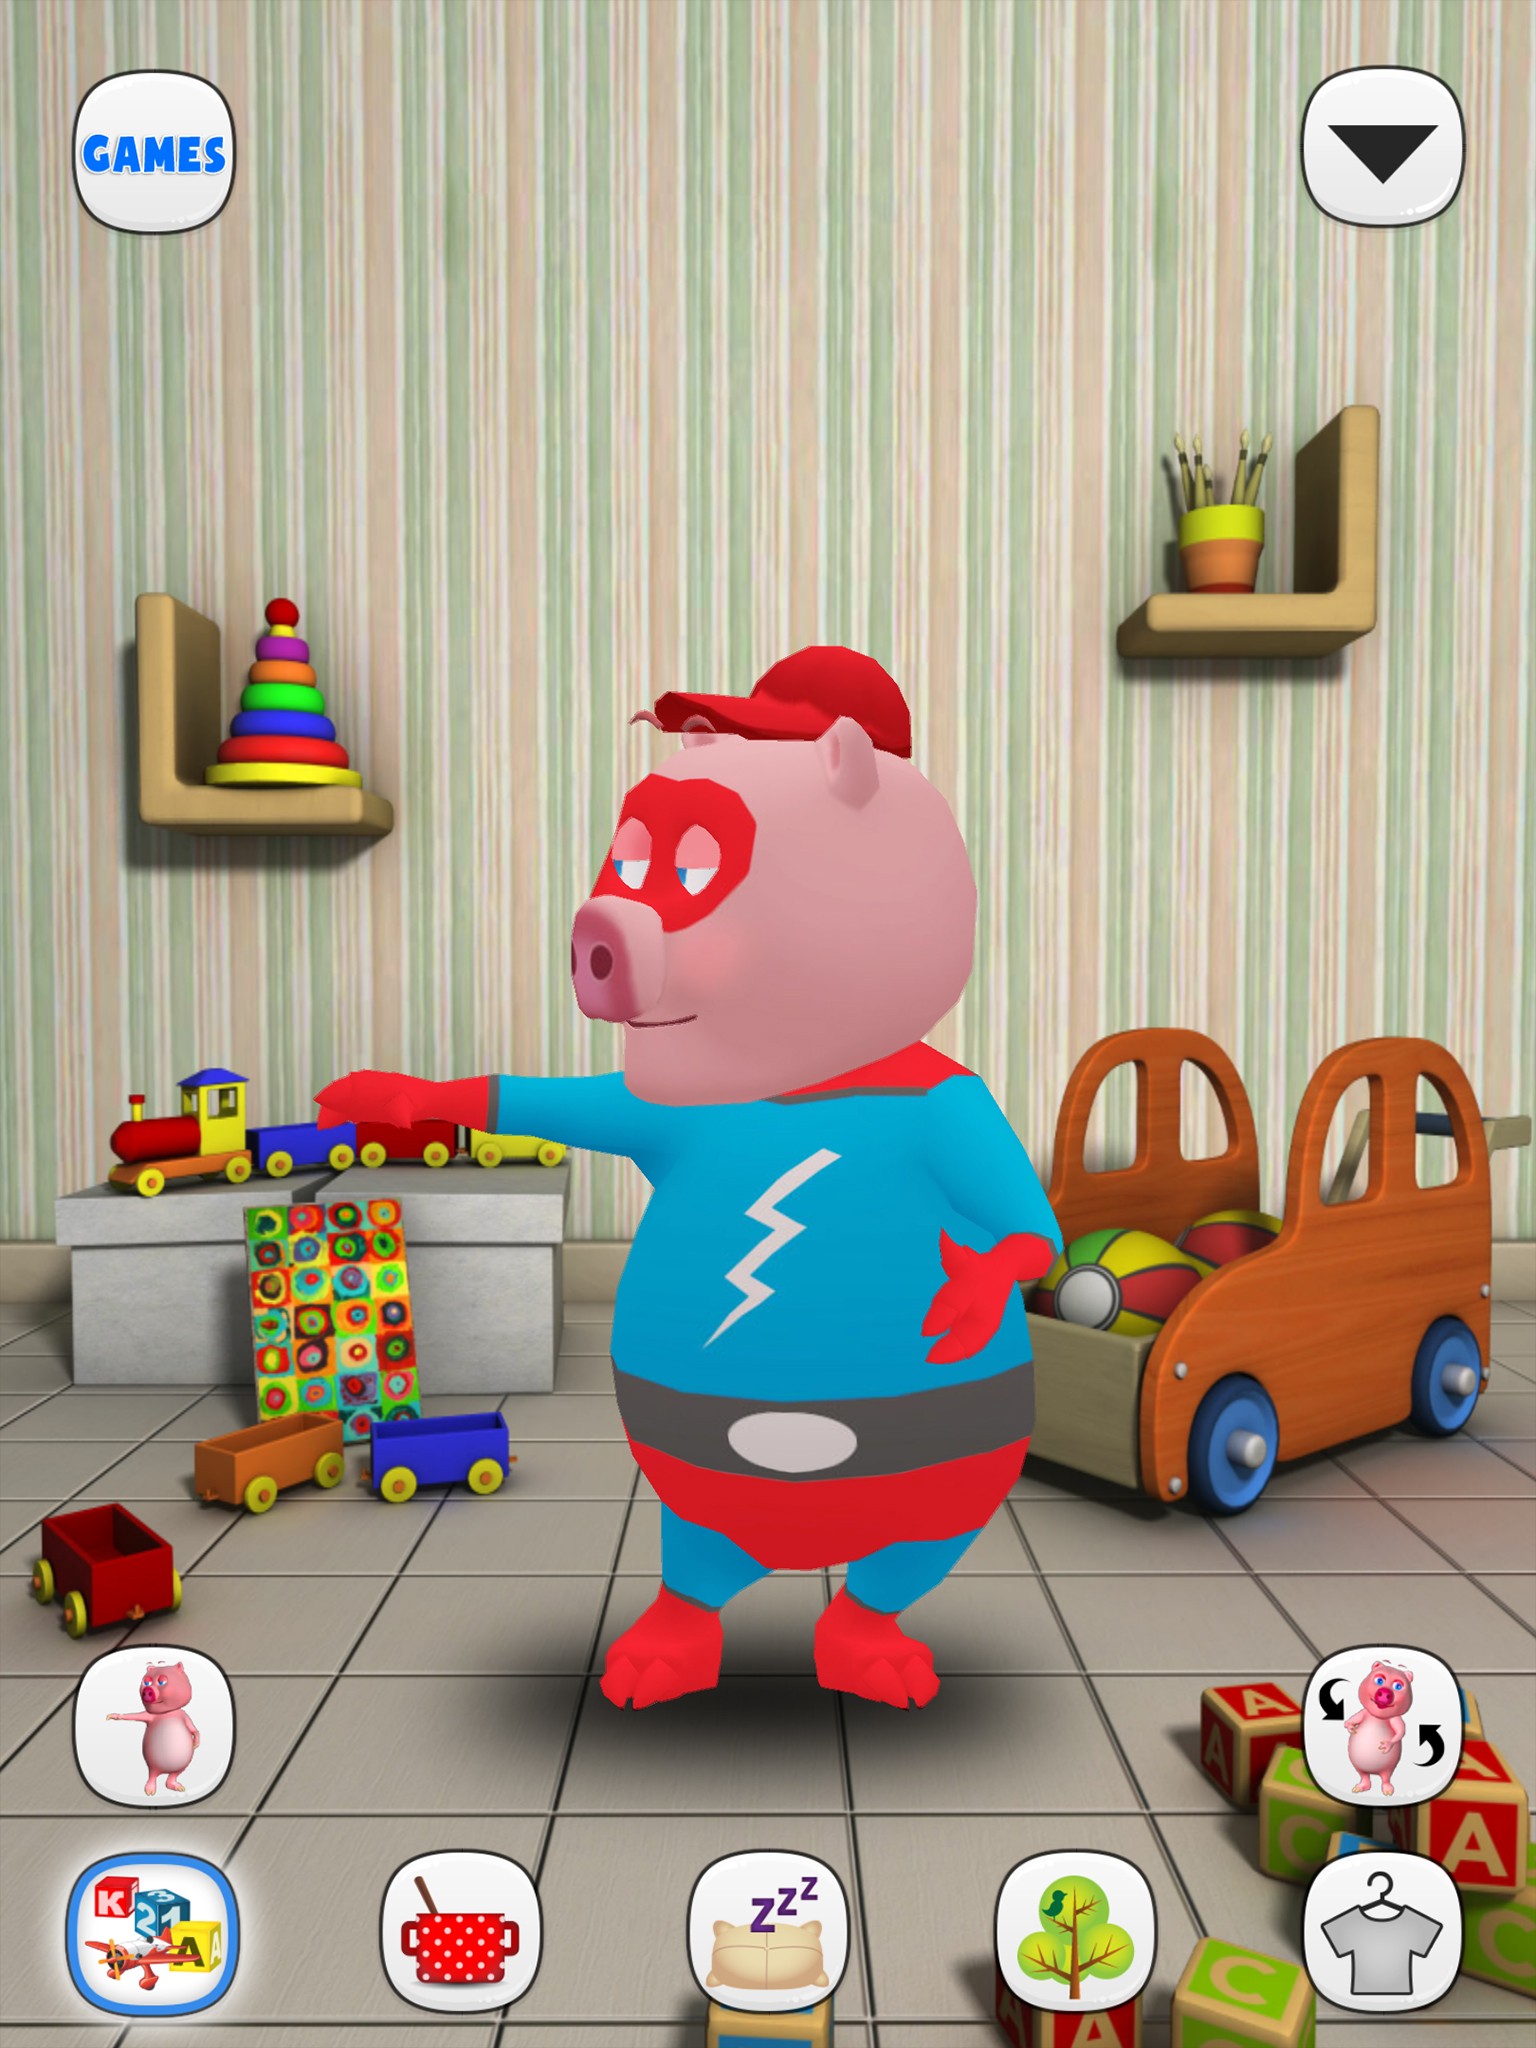 My Talking Pig Virtual Pet